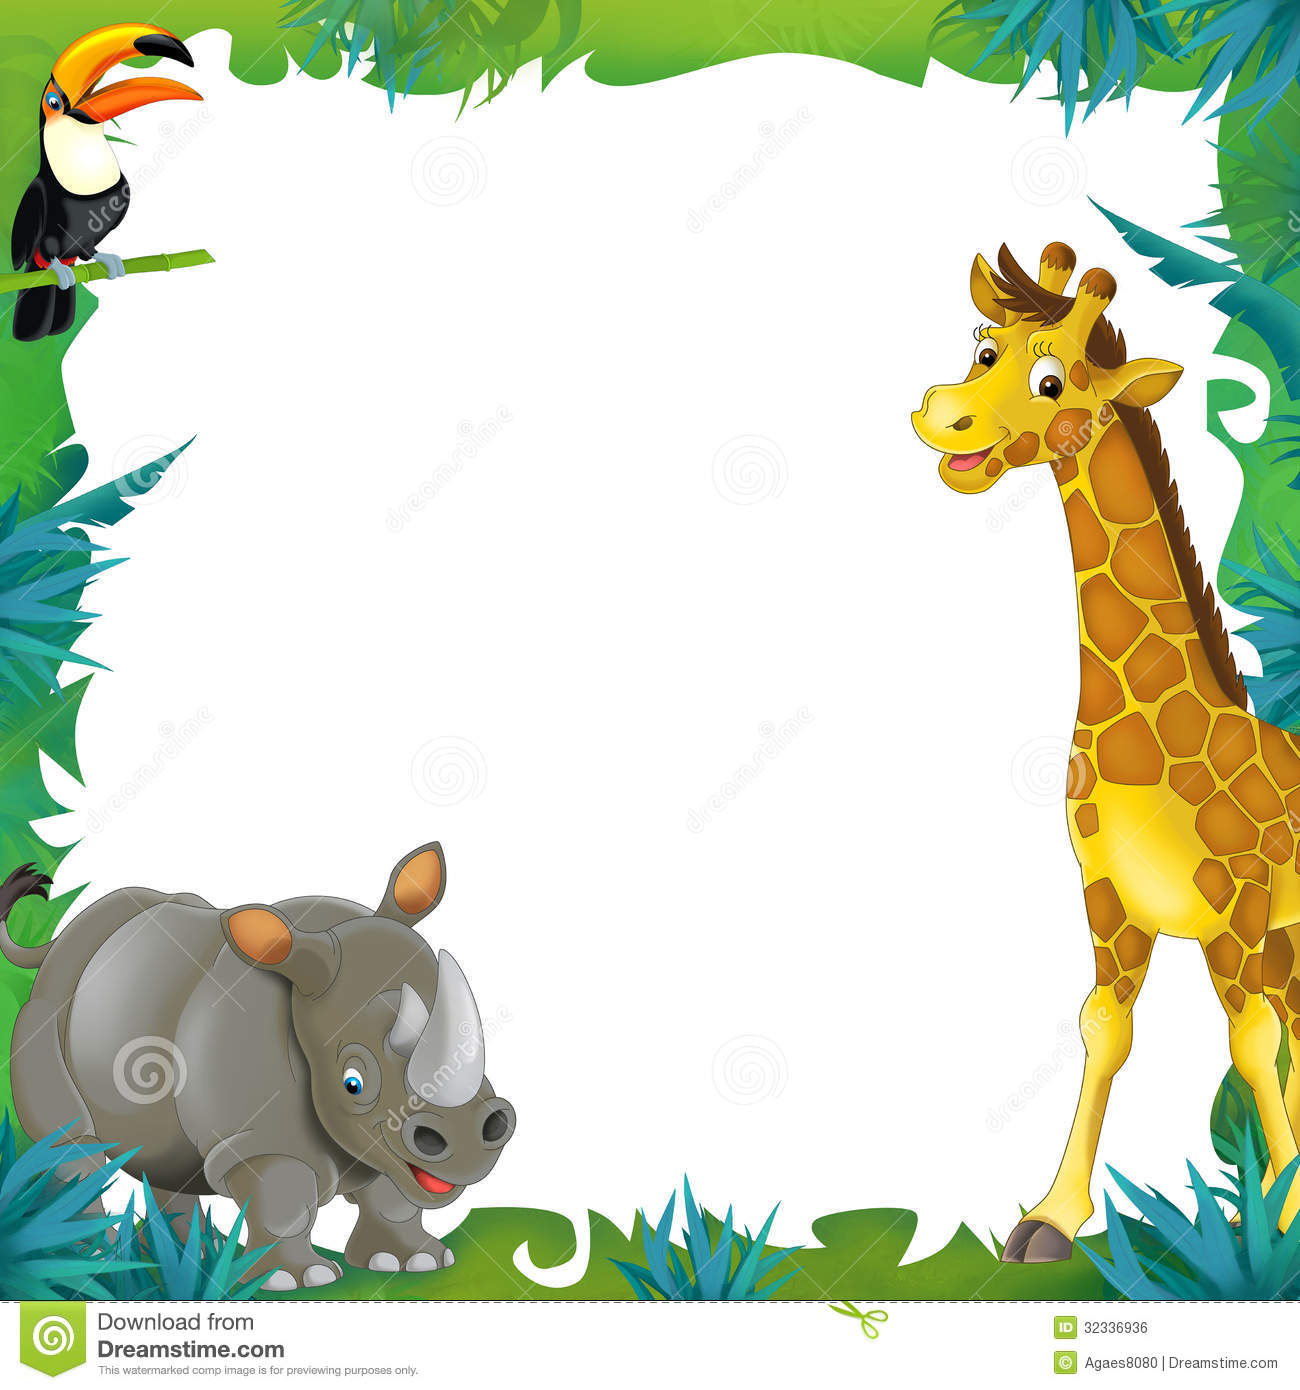 Cartoon Safari   Jungle   Frame Border Template   Illustration For The